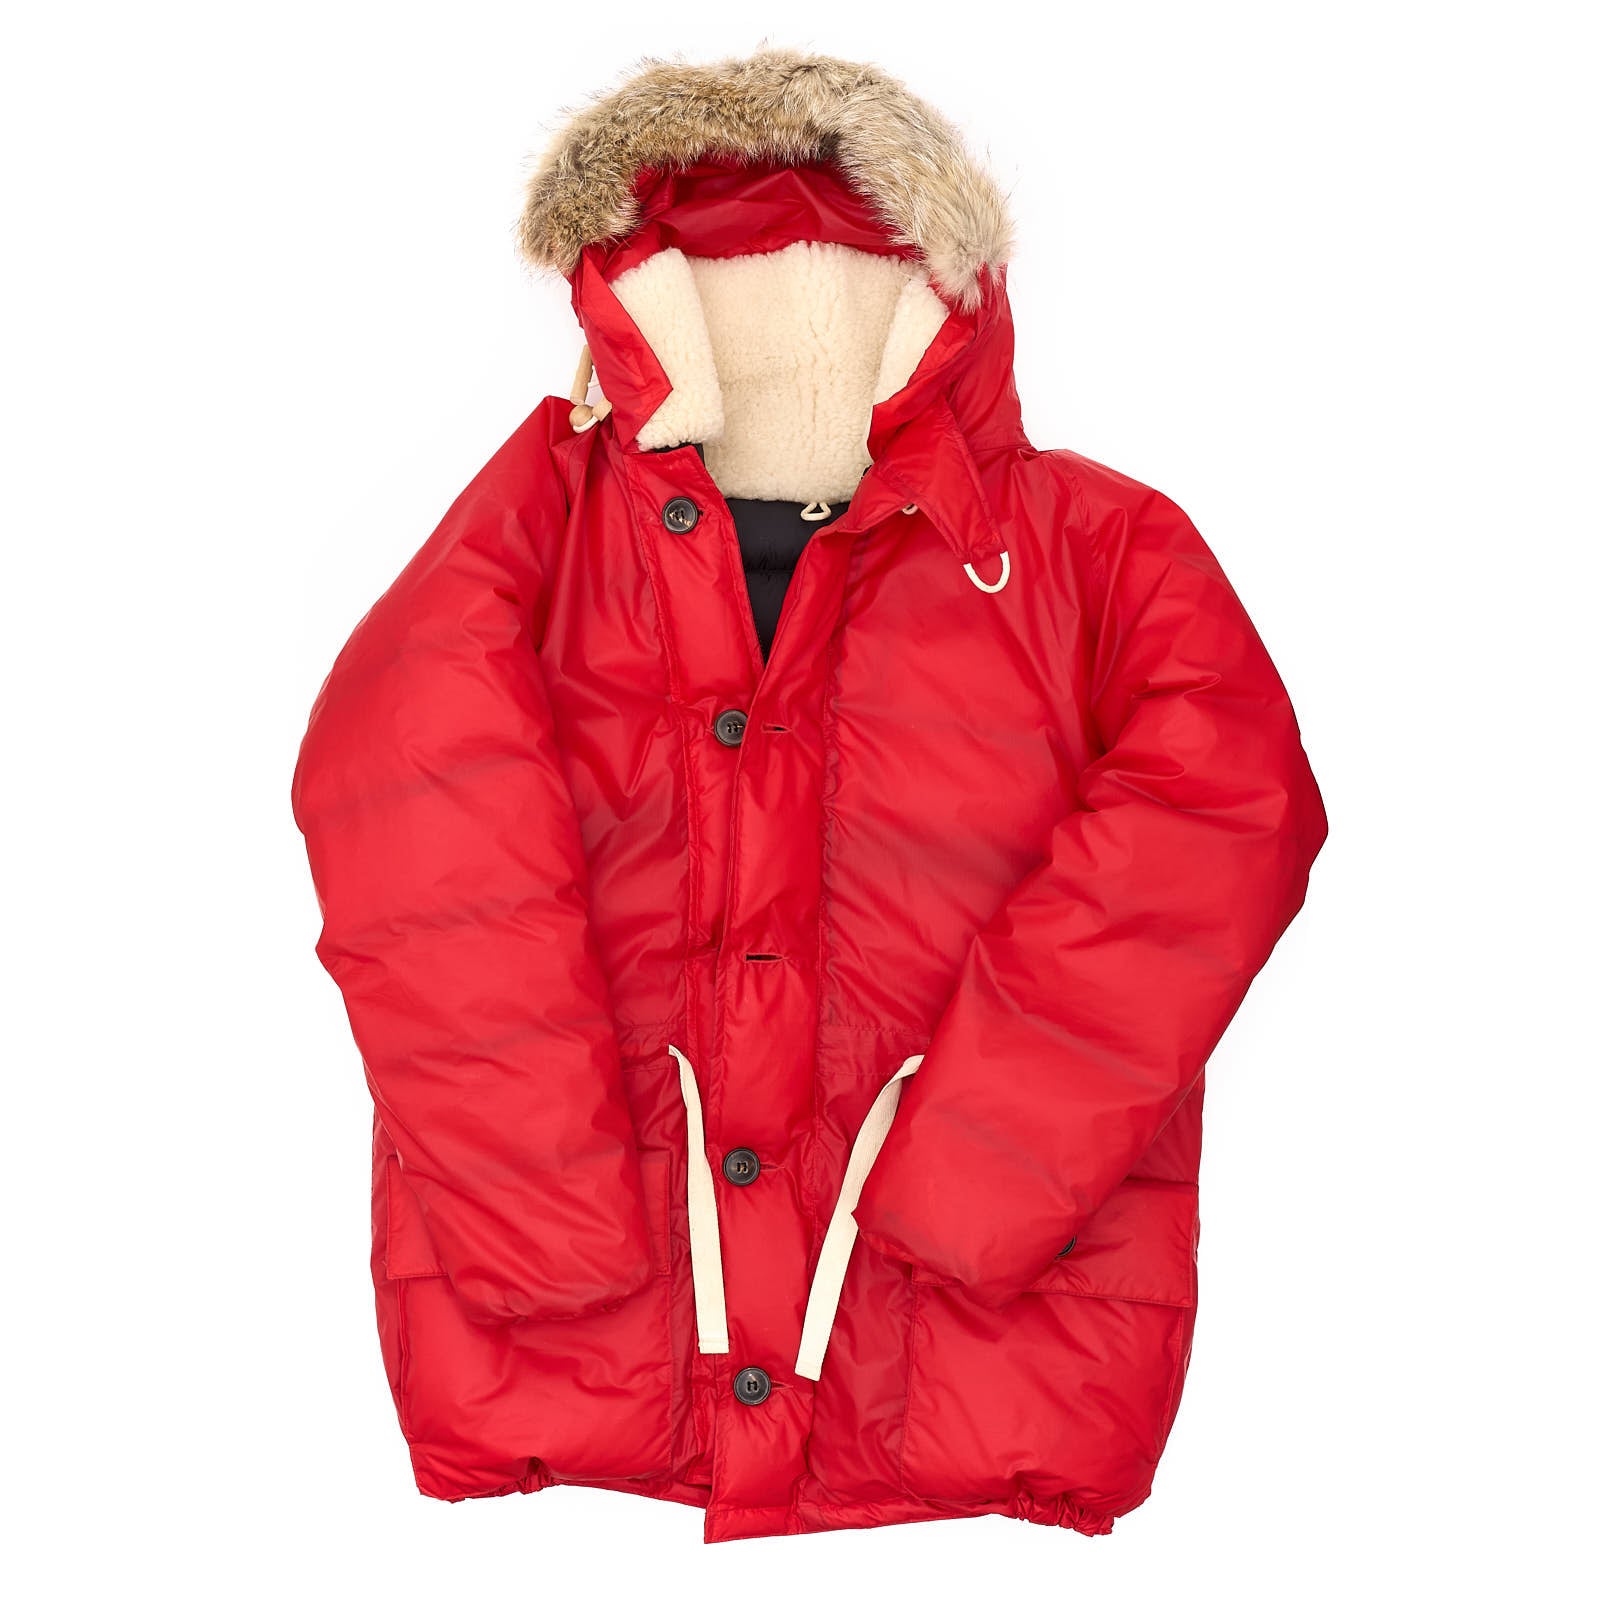 Cabourn Everest Parka Sample Coyote Ruff Sheepskin Collar Size L / 52 Jacket